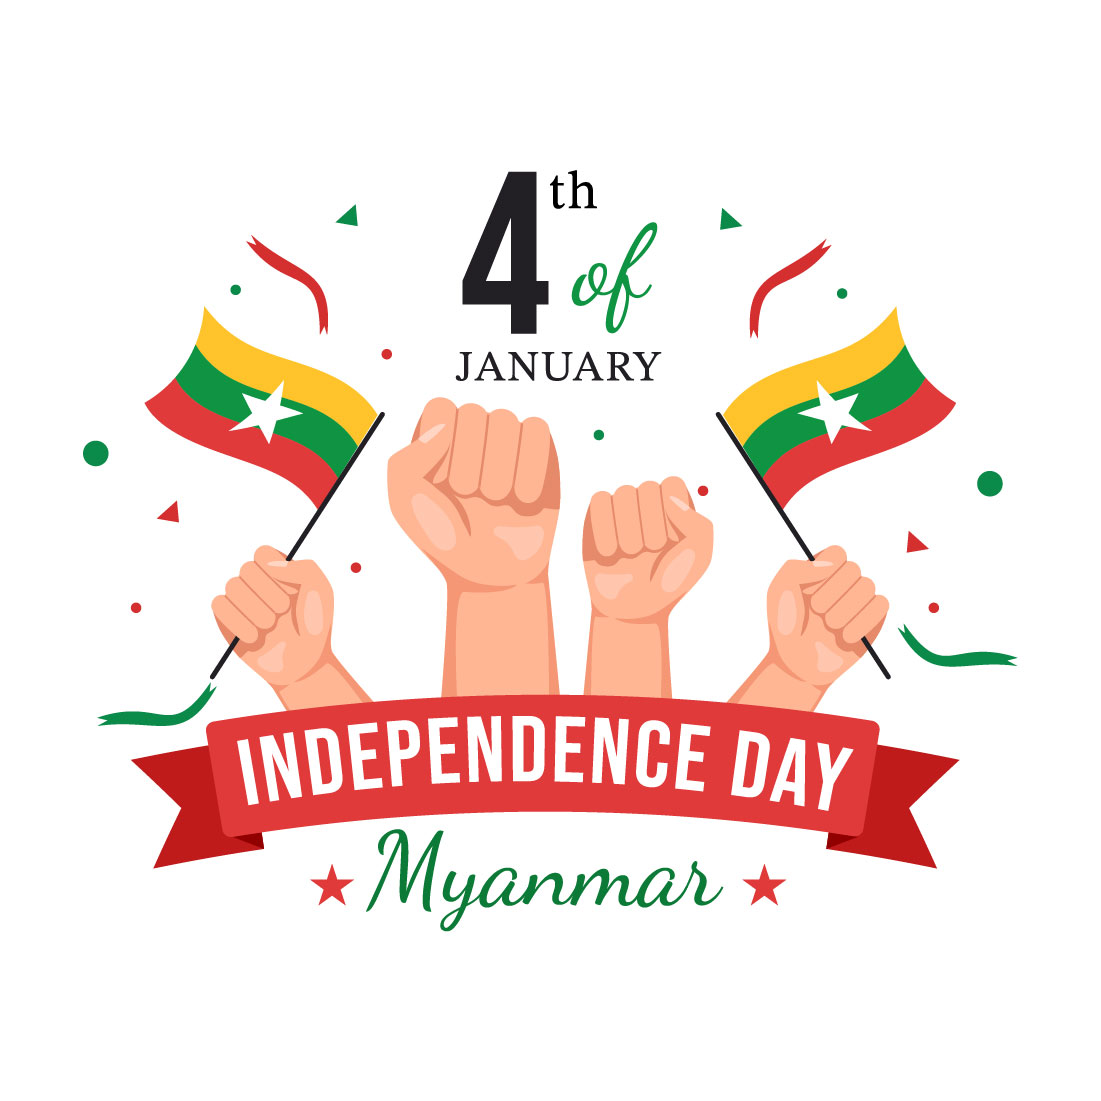 17 Myanmar Independence Day Illustration created by denayuneMV.